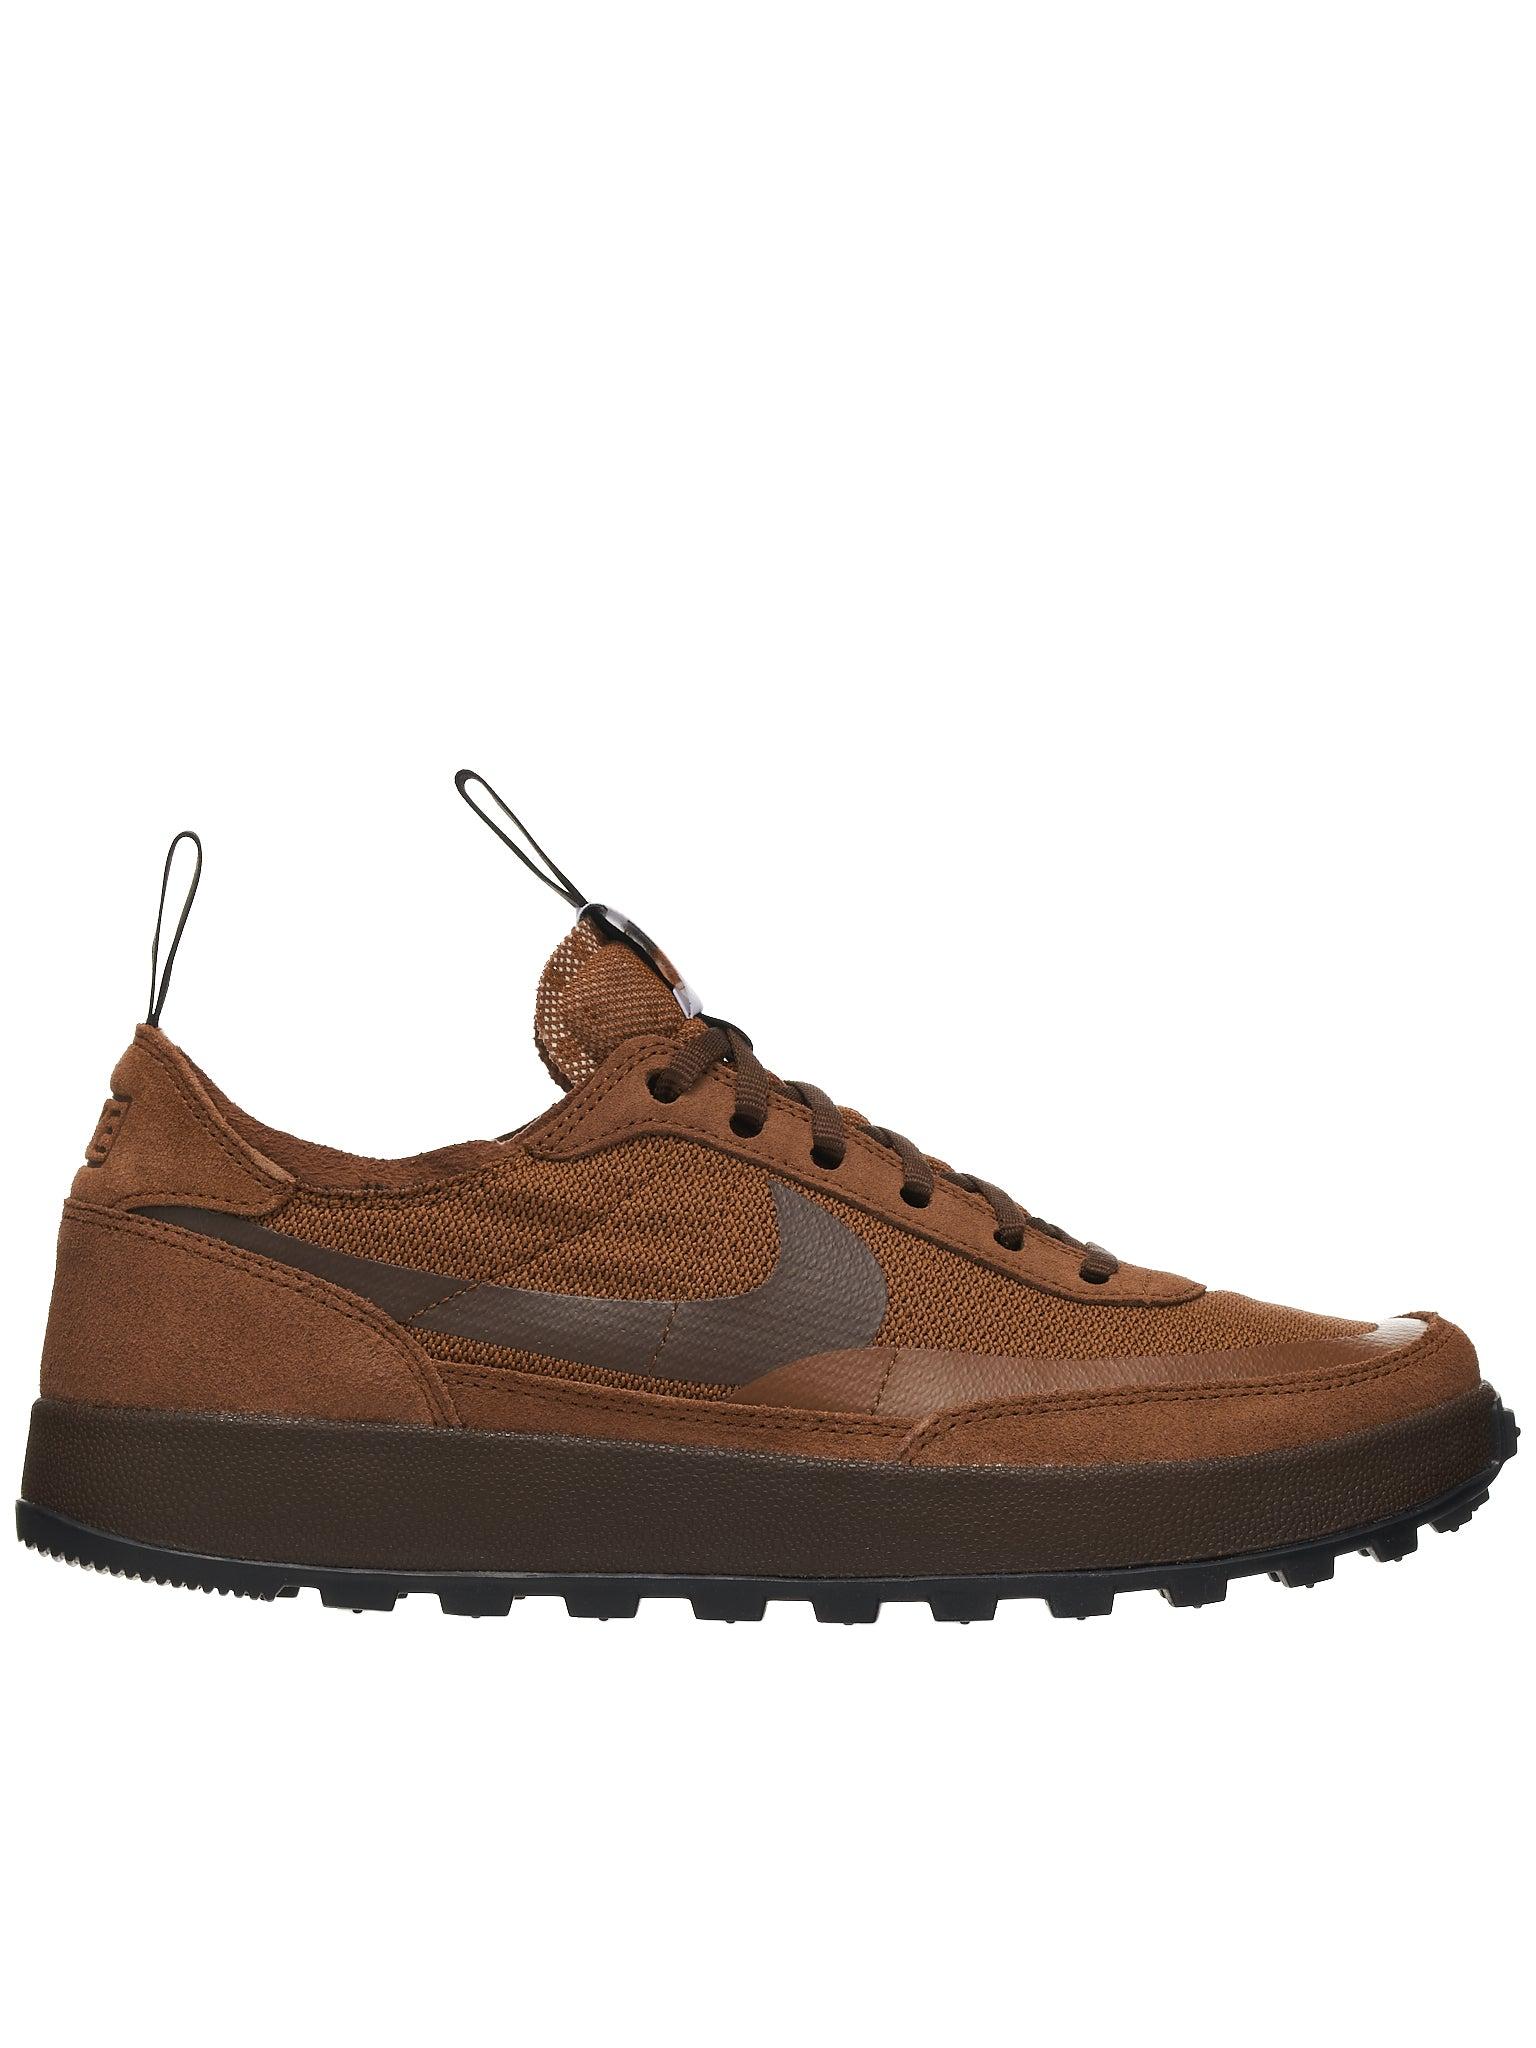 Nike Tom Sachs General Purpose Shoe in Brown | Lyst